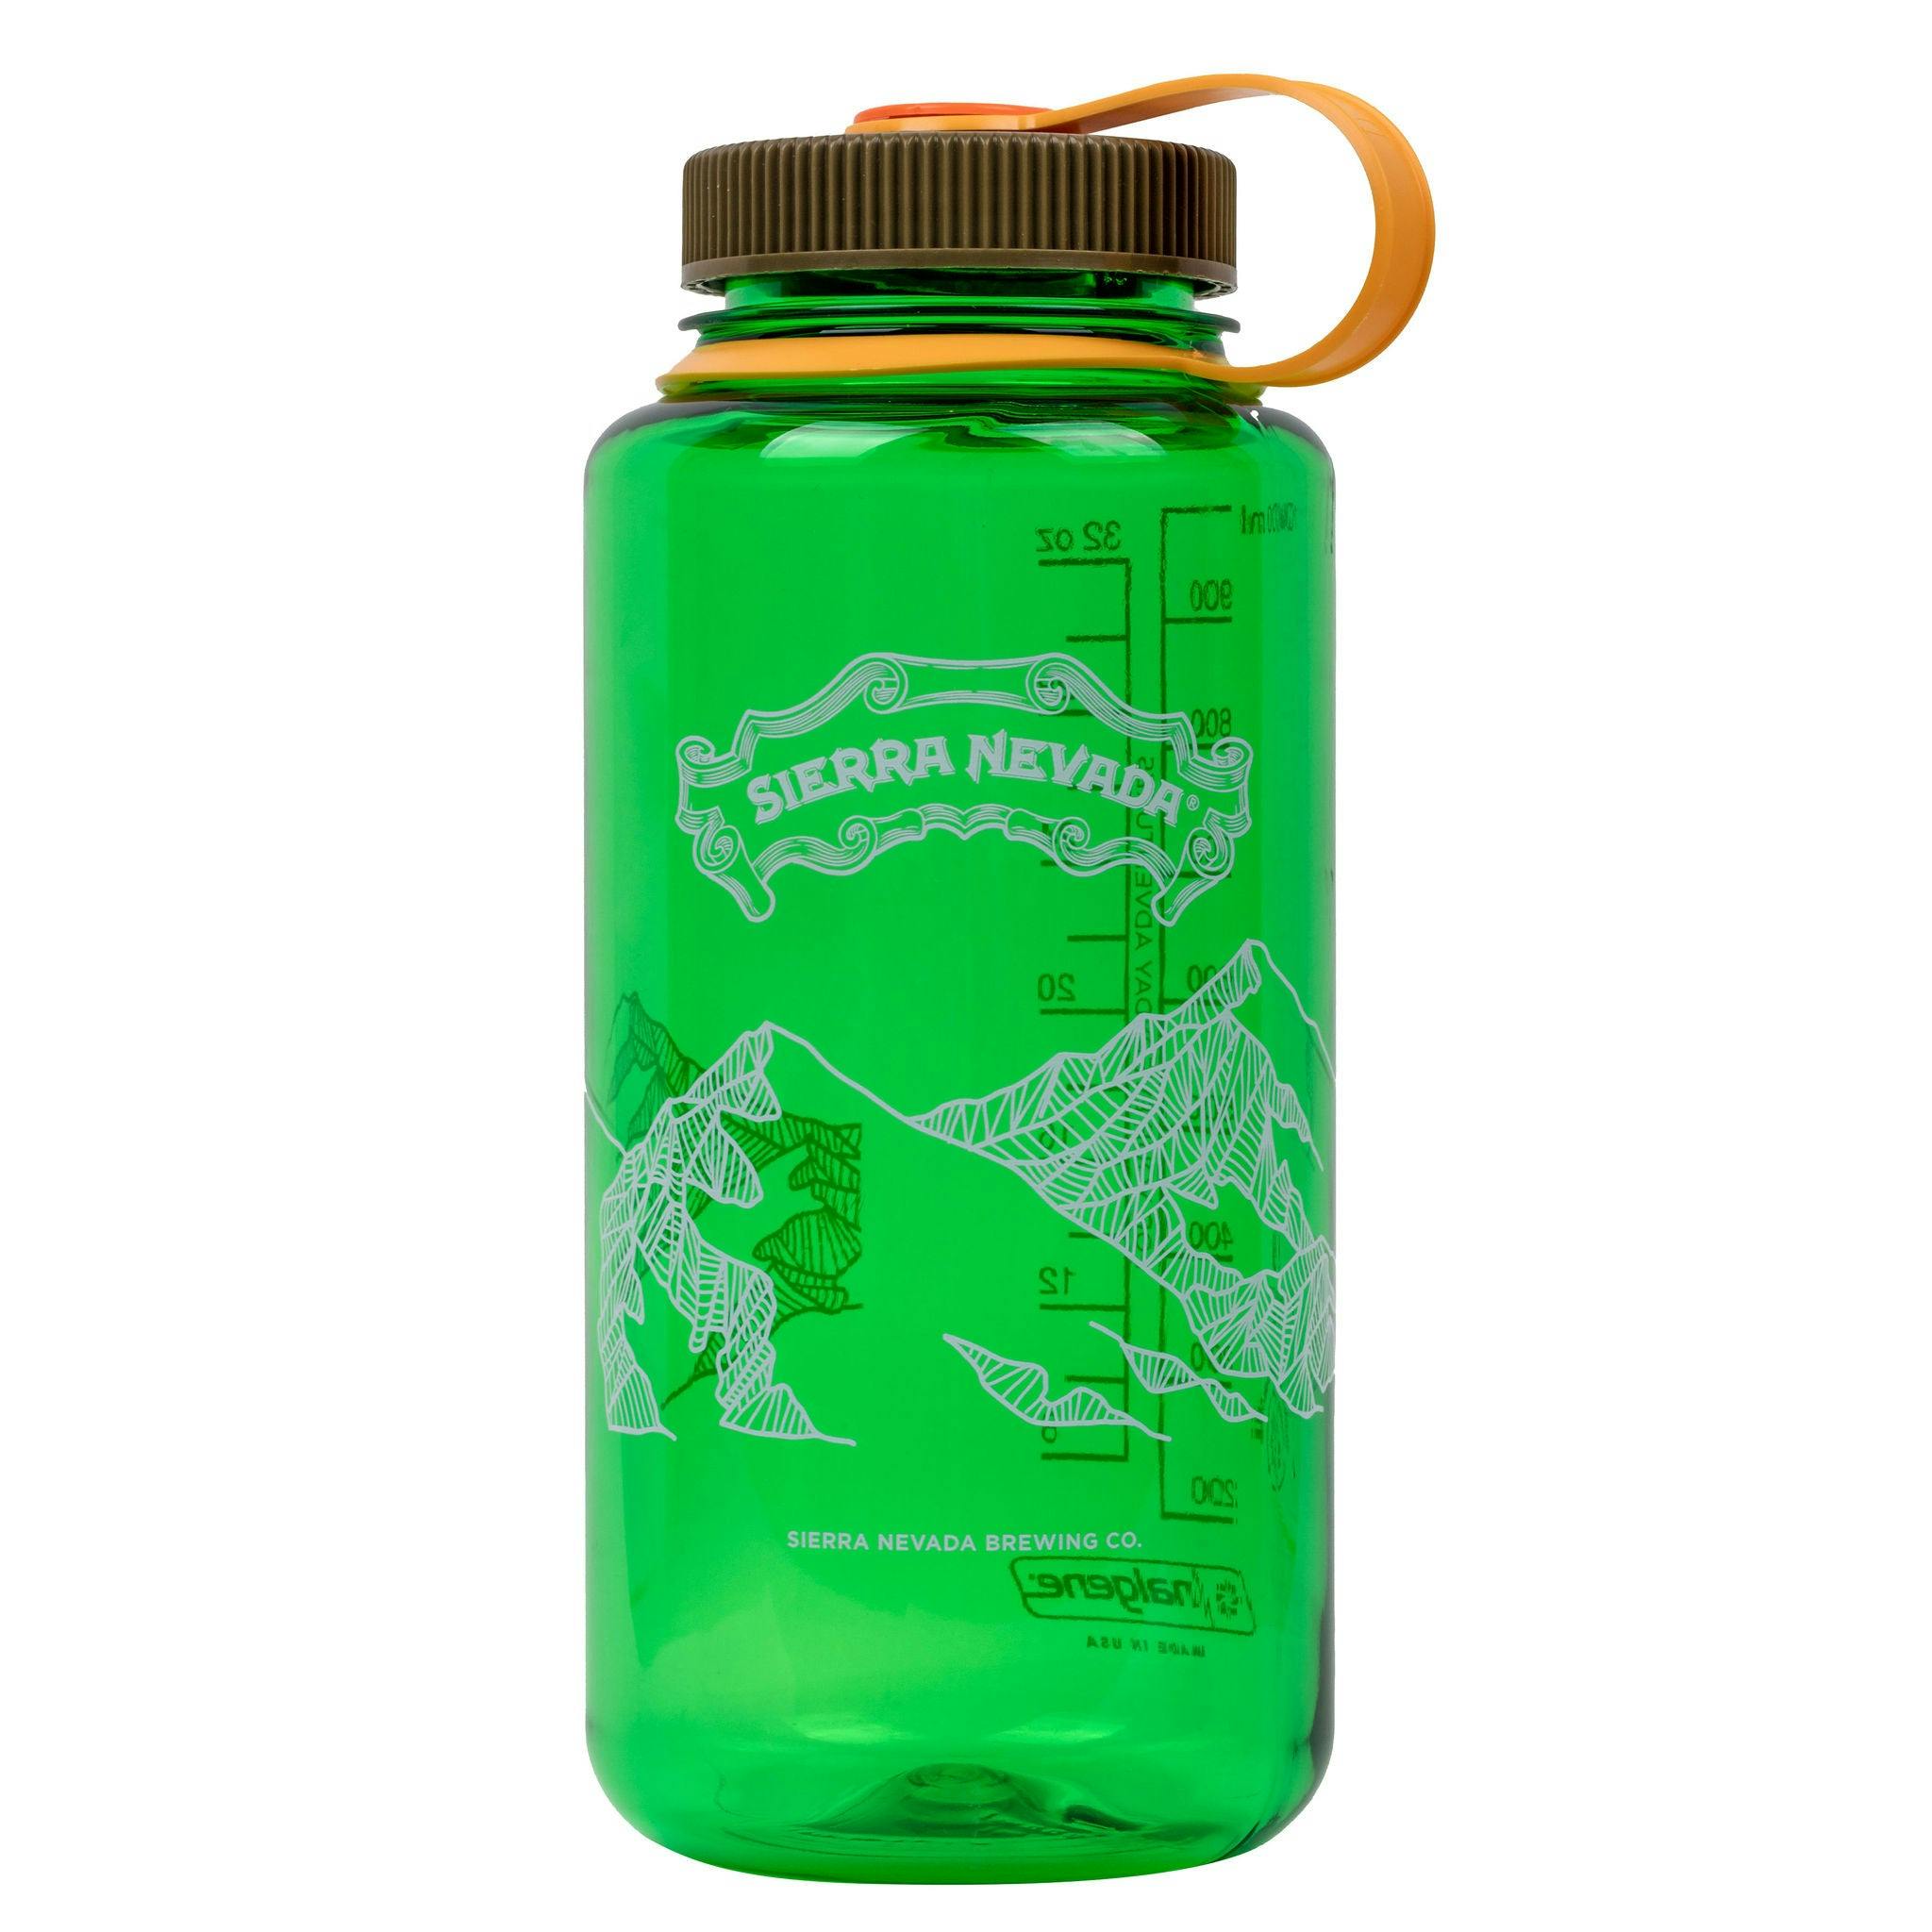 Nalgene 32oz green water bottle - front view featuring the Sierra Nevada scroll logo and mountain peak line art design